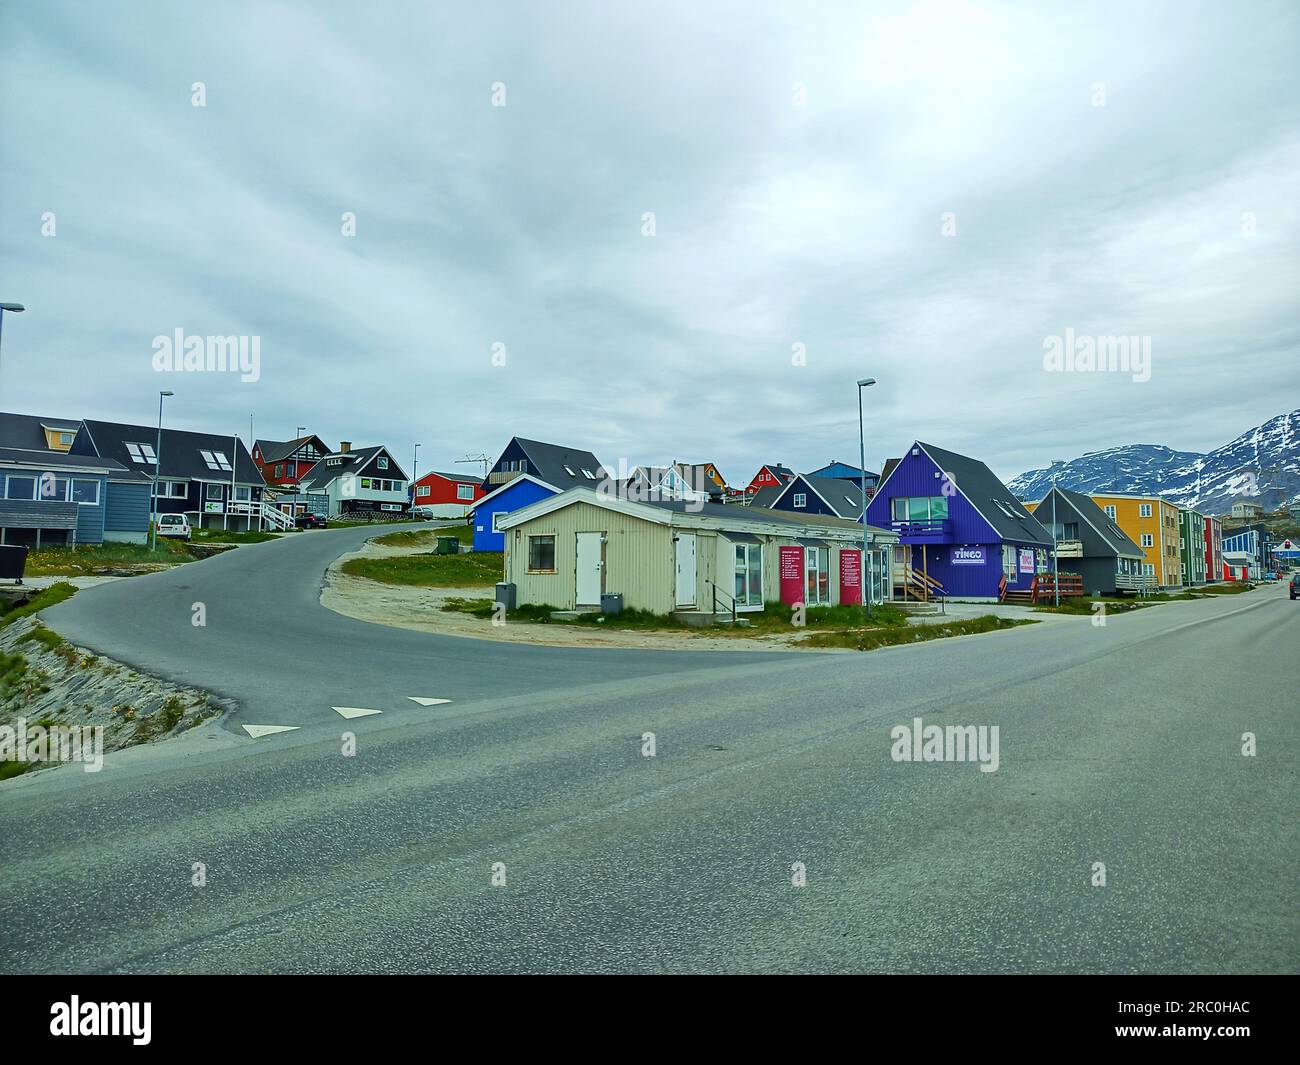 homes in Nuuk, Houses in nuuk,nuuk,greenland,nuuk,nuuk town,nuuk city,nuk,inuit,denmark coclony,,nomadic,nuuk,greenland,nuuk,nuuk town,nuuk city,nuk, Stock Photo